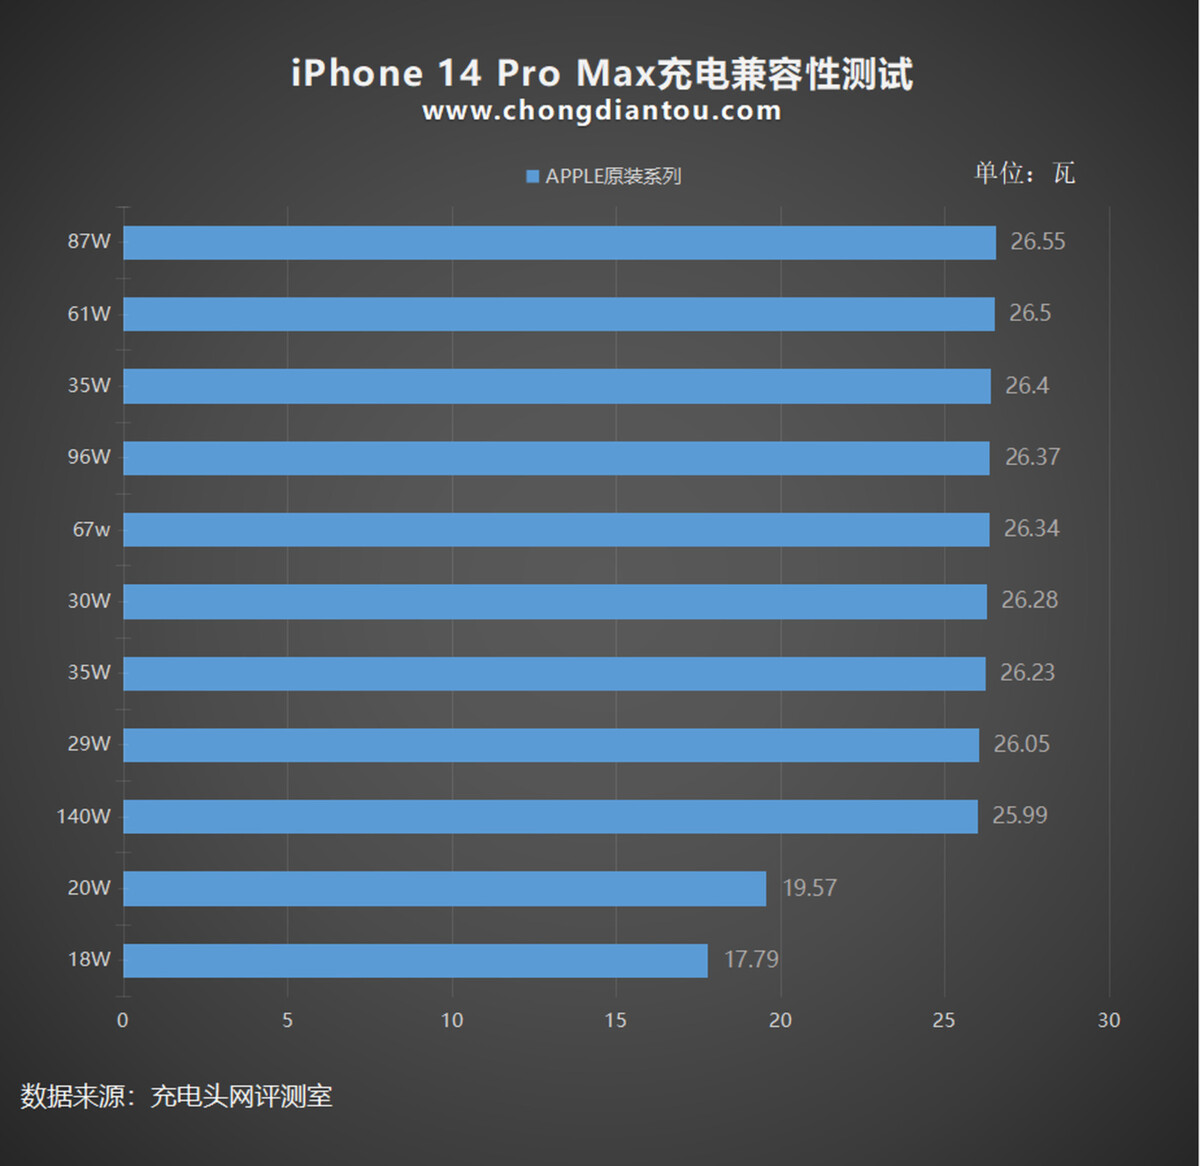 Chongdiantou-iPhone-14-Pro-Max-Charging-Speeds